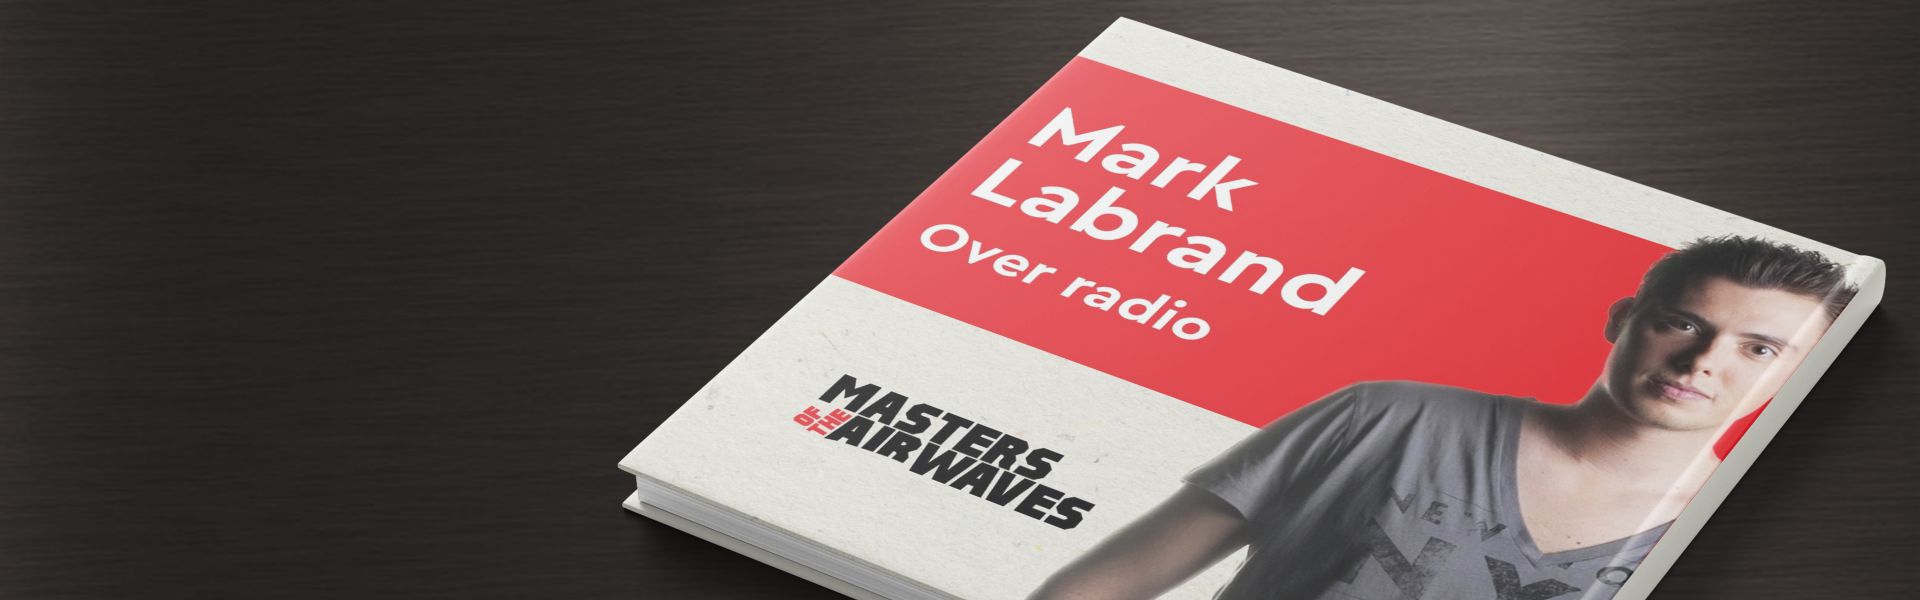 Mark Labrand over Radio